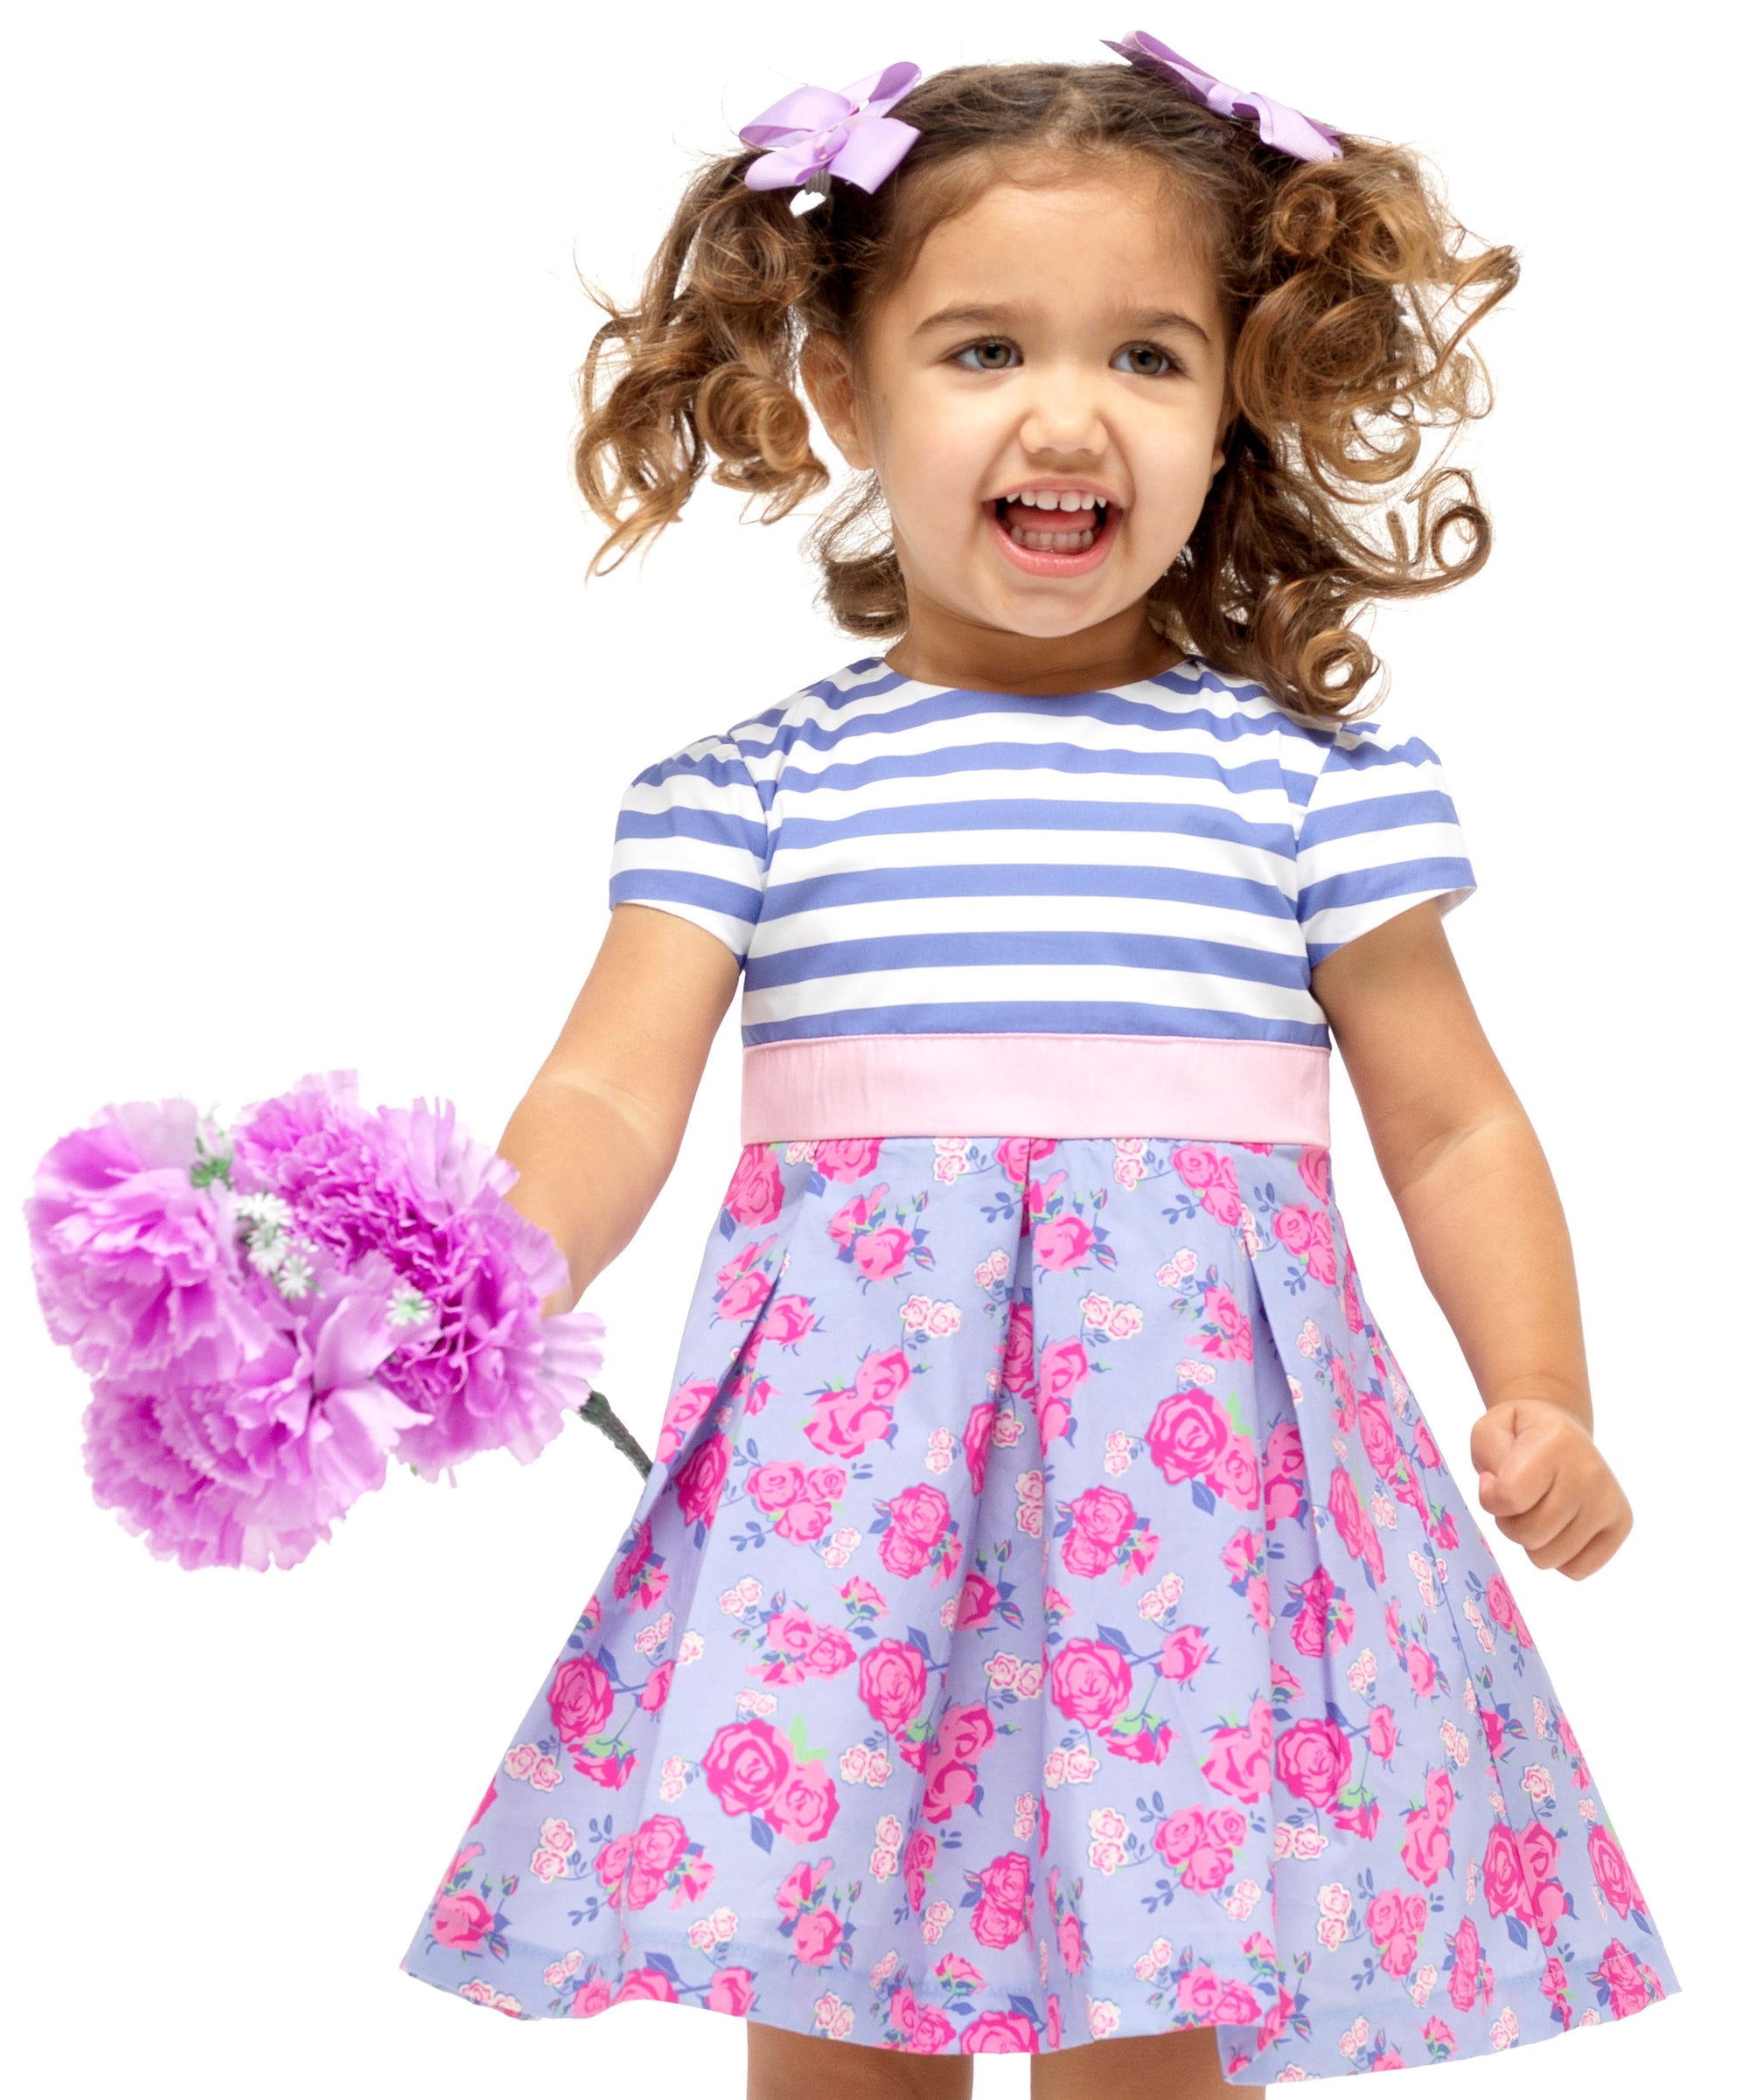 Little Girls Party Dress - Stripes Blue & Pink Florals